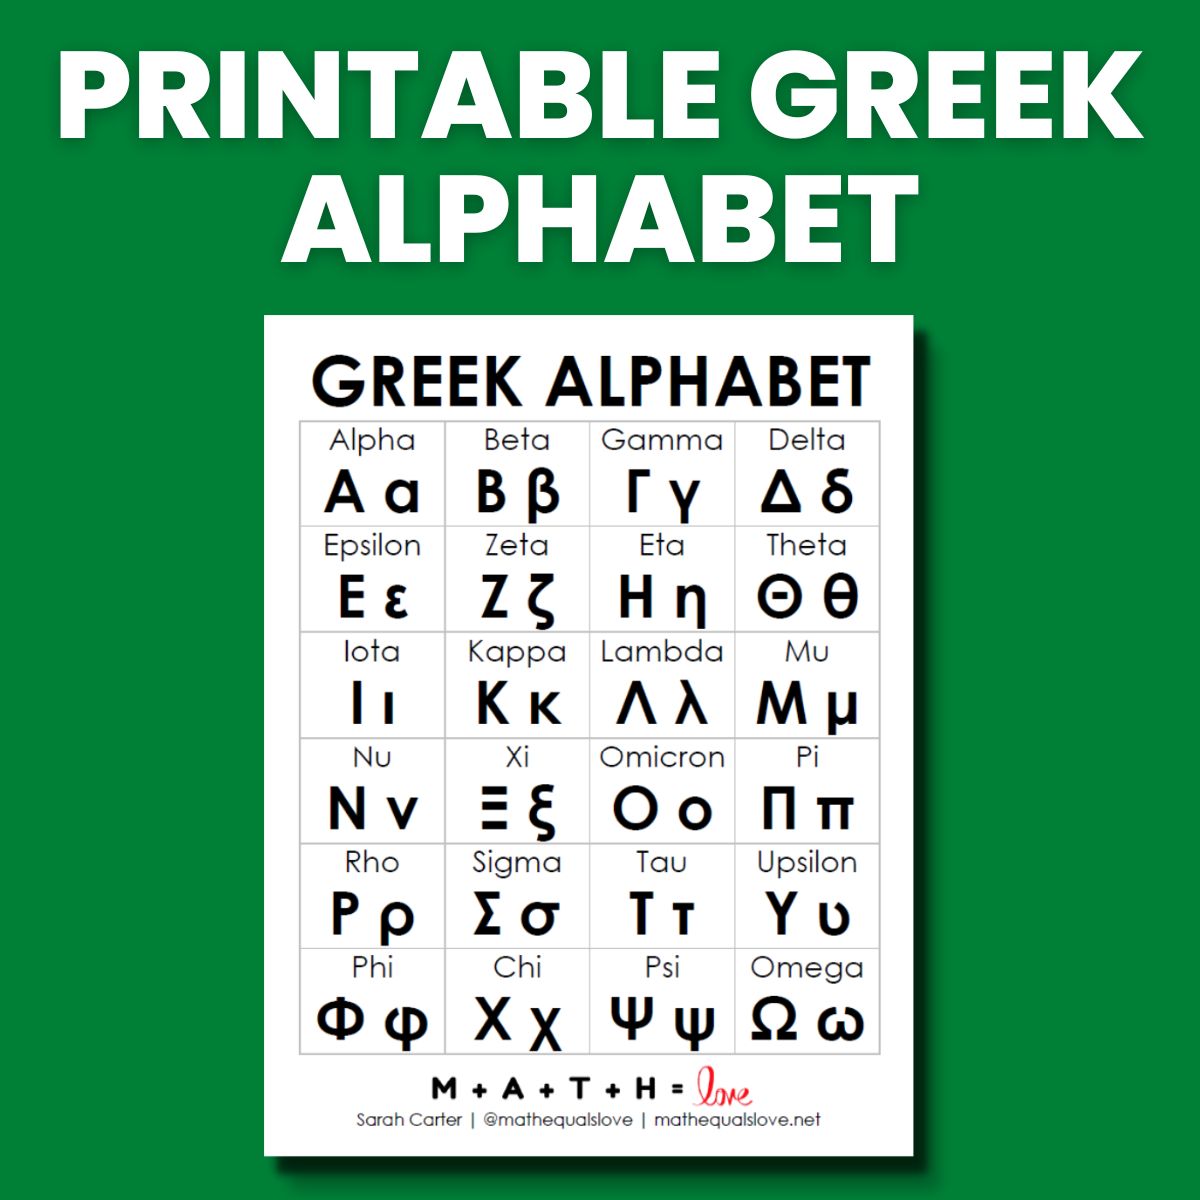 Printable Greek Alphabet Featured Image 